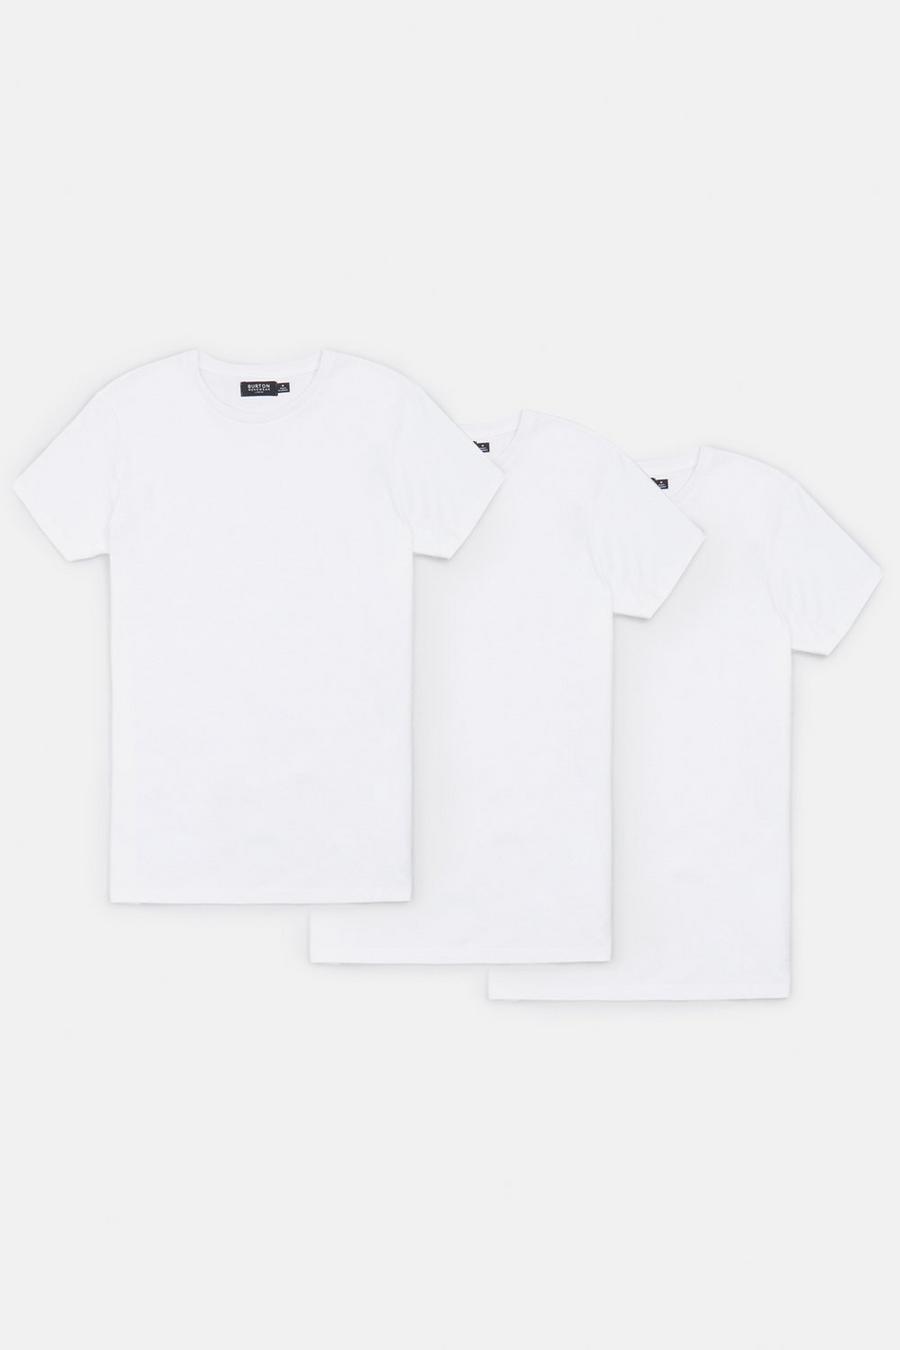 3 Pack White T-shirt